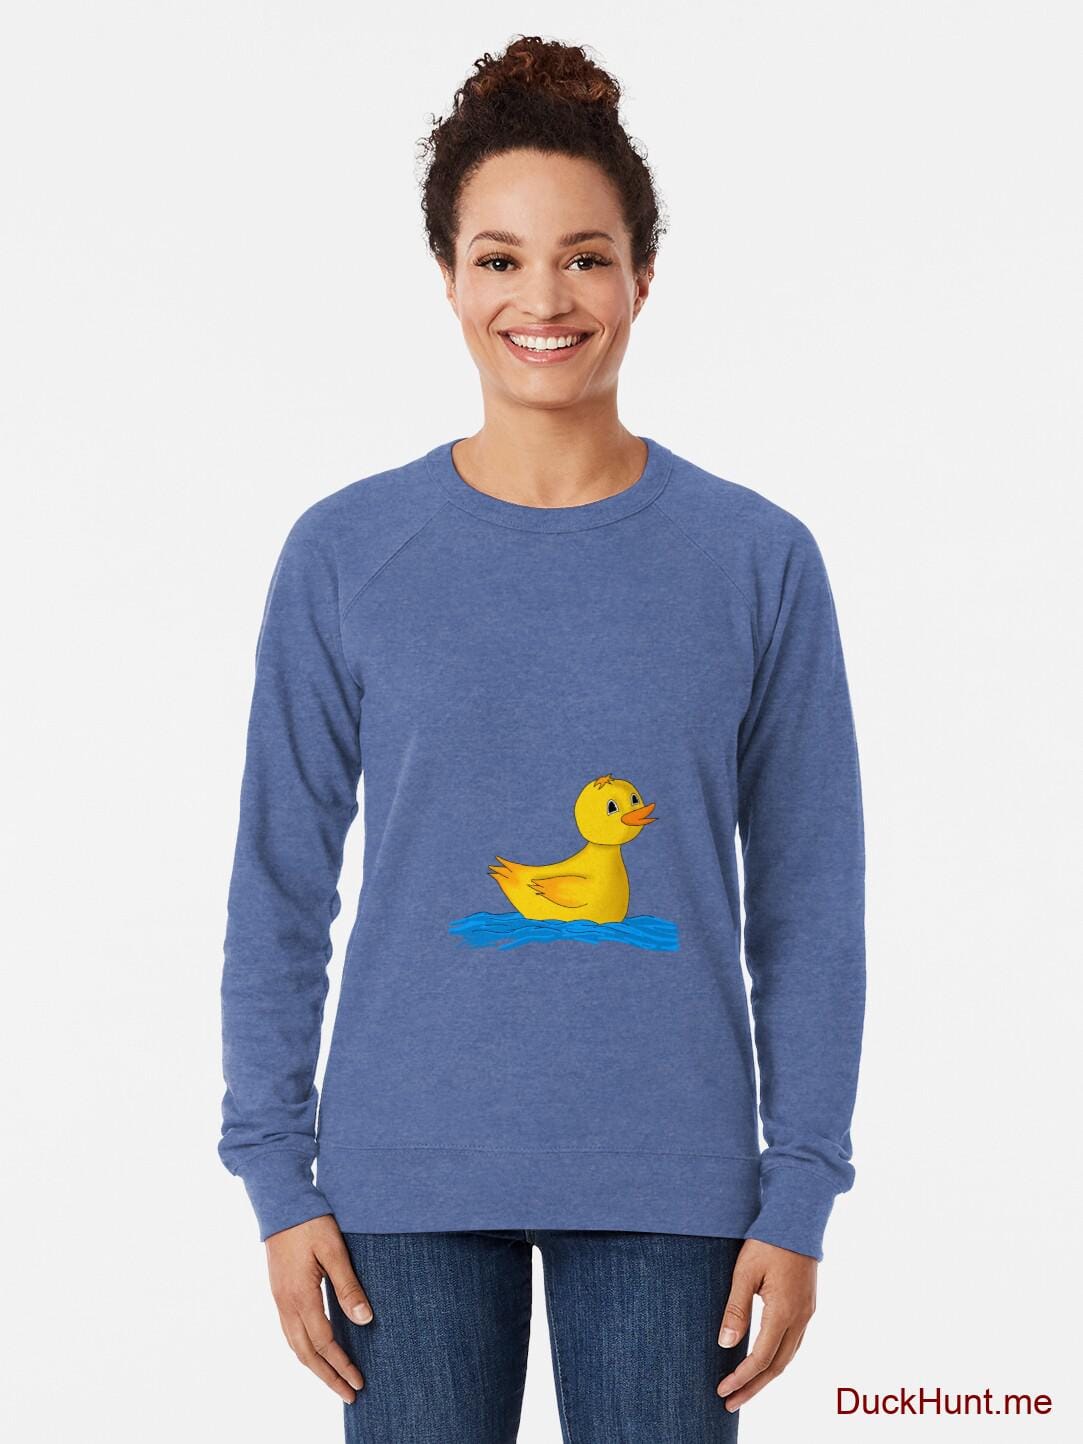 Plastic Duck Royal Lightweight Sweatshirt alternative image 1